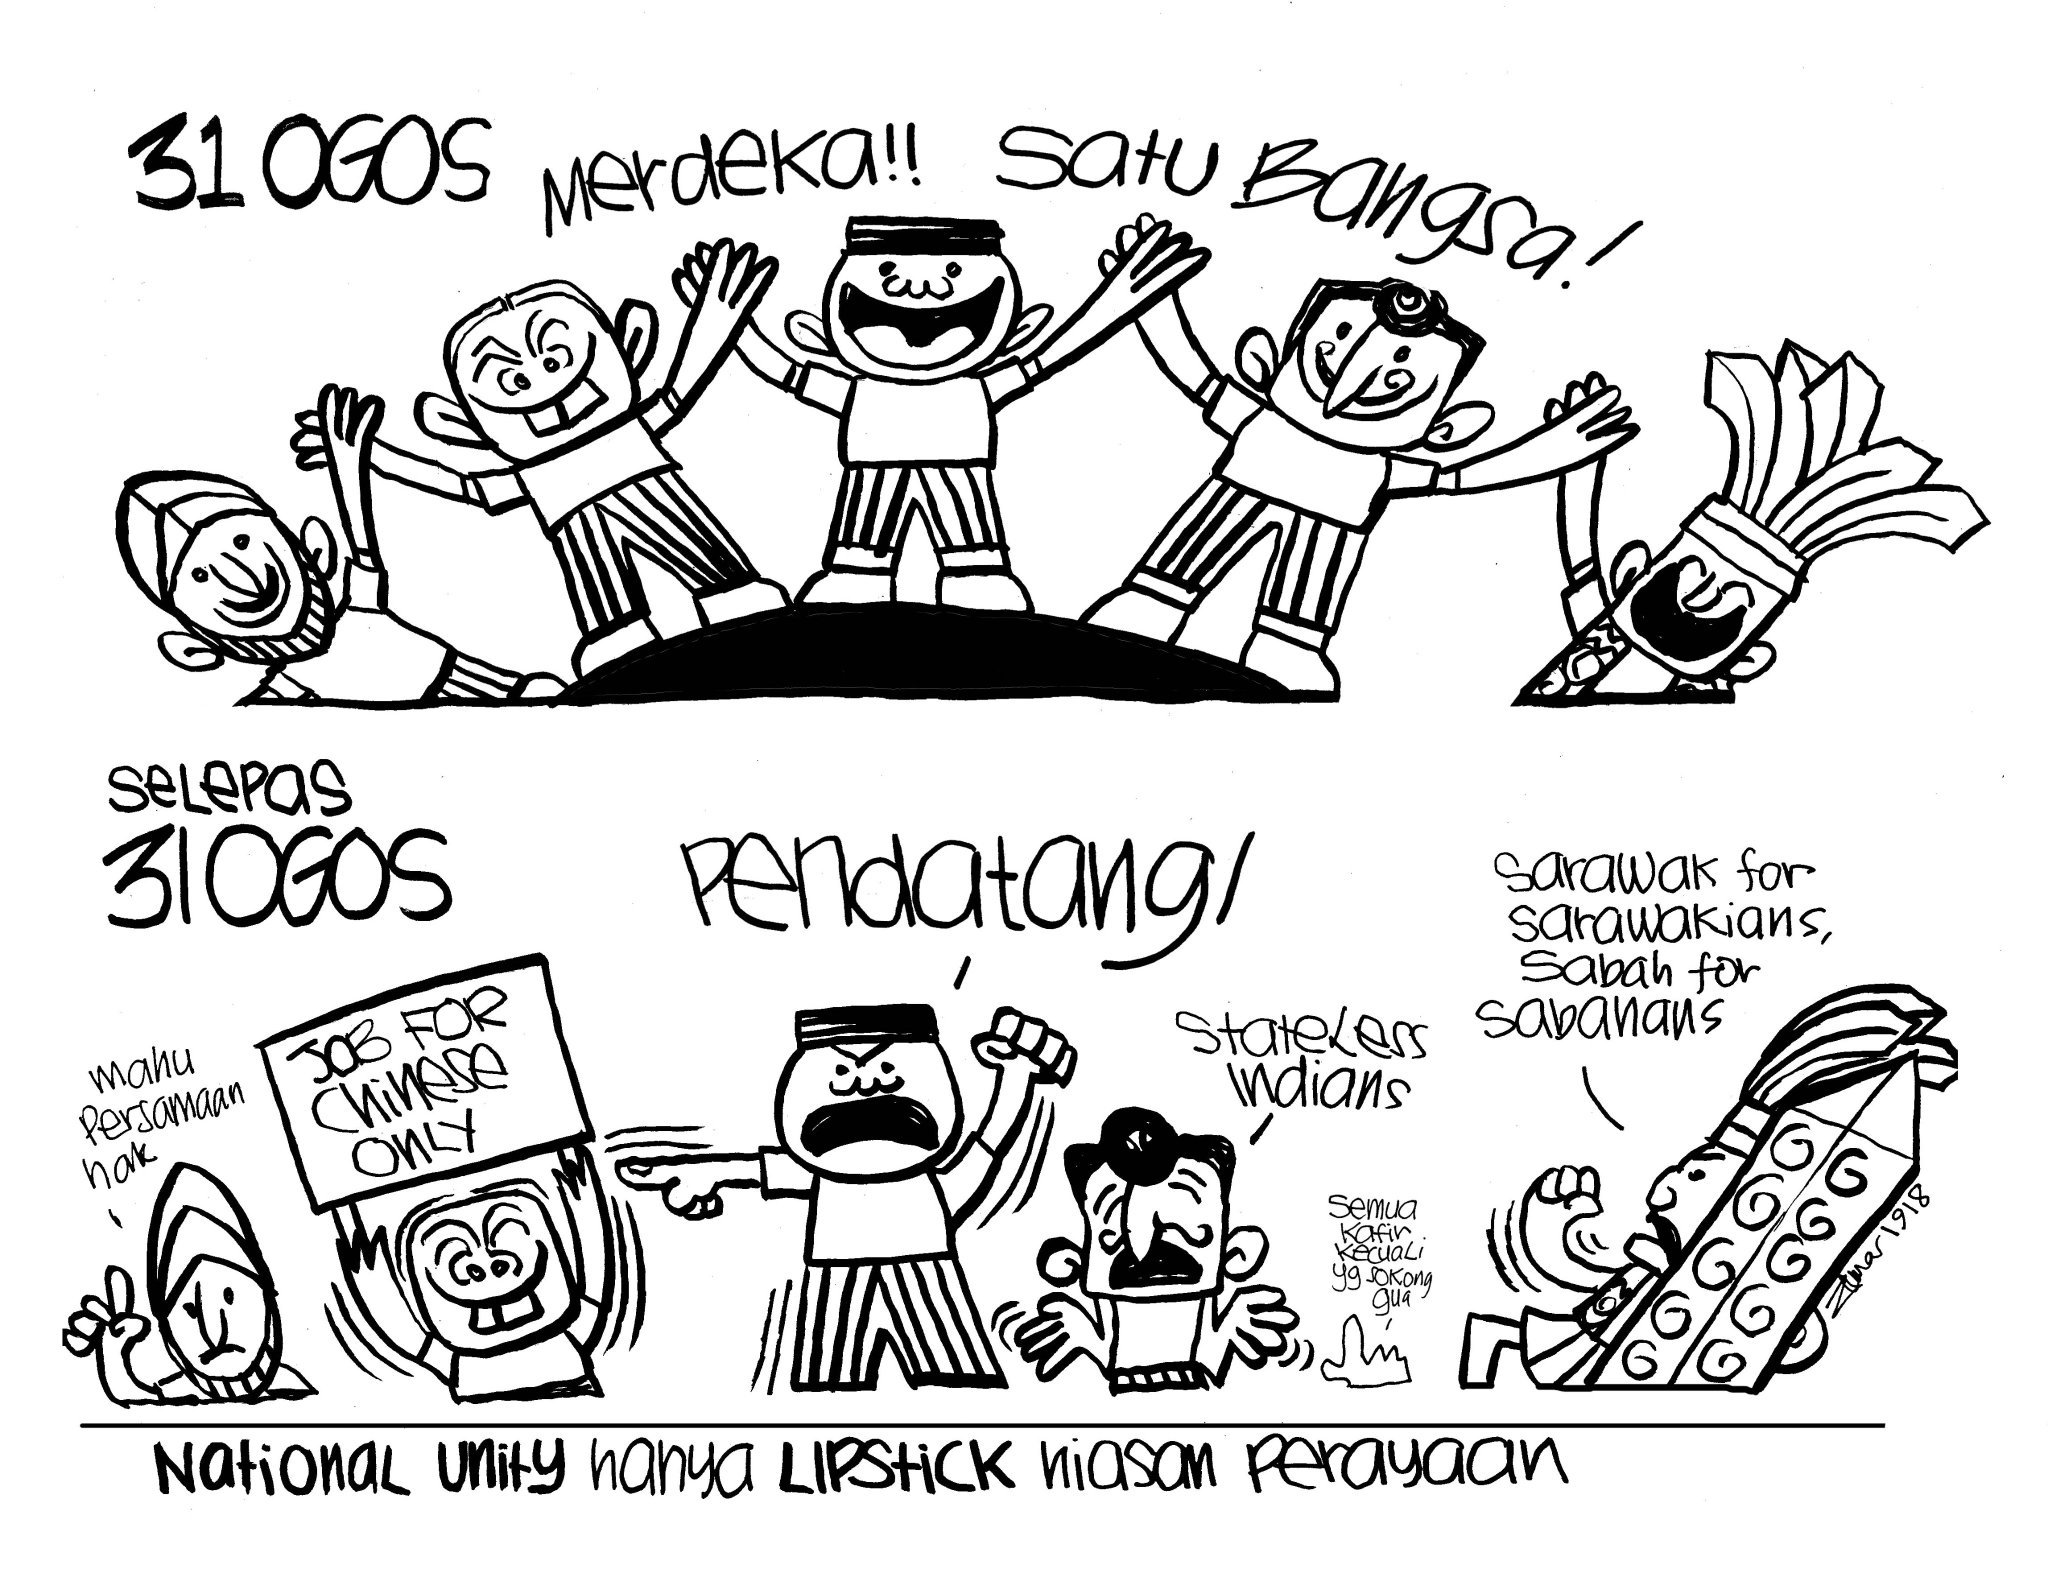 Zunar Cartoonist On Twitter Perpaduan Kaum National Unity